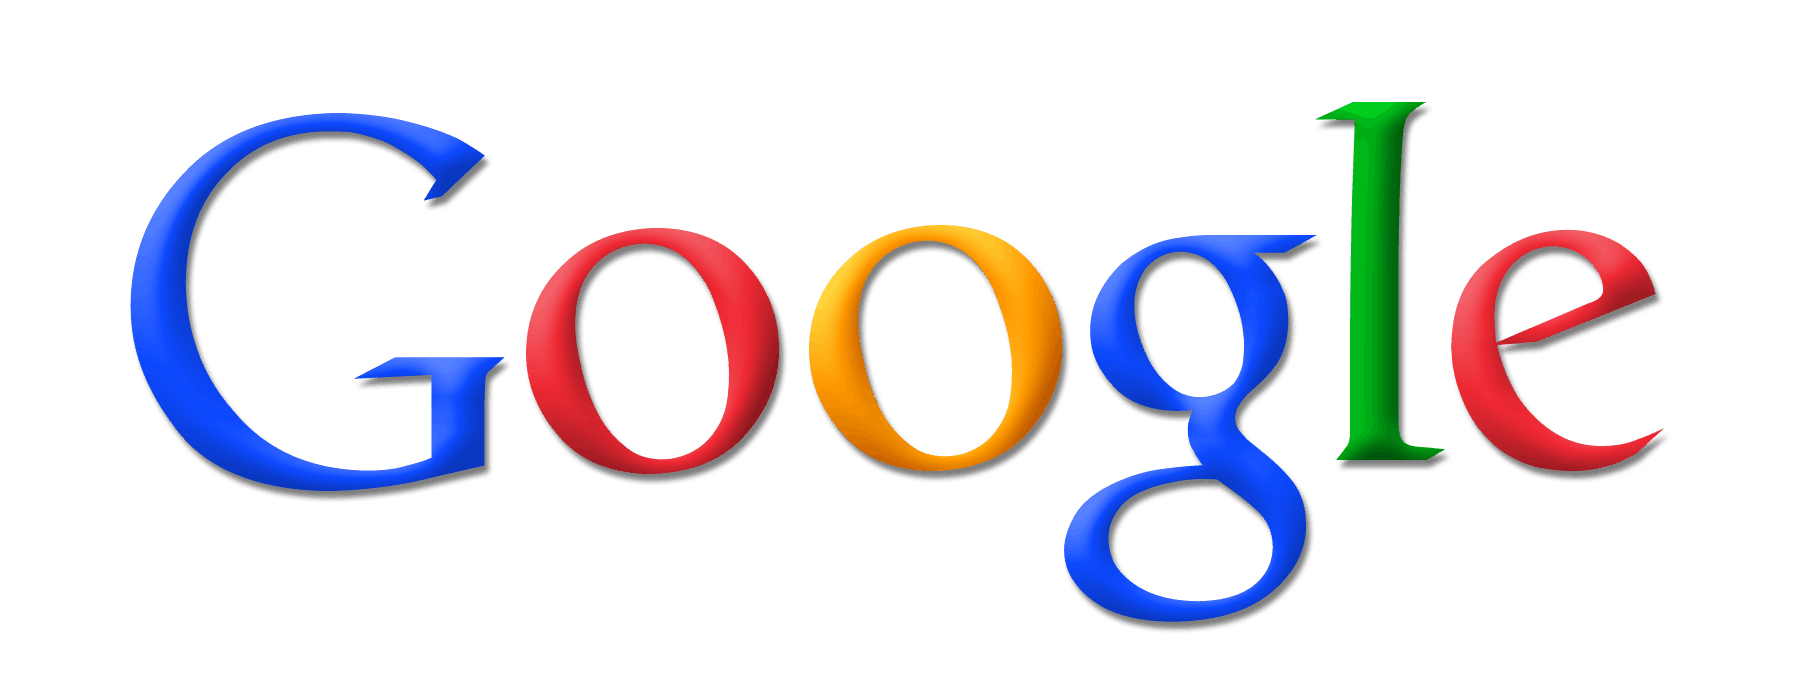 new-google-logo-knockoff1